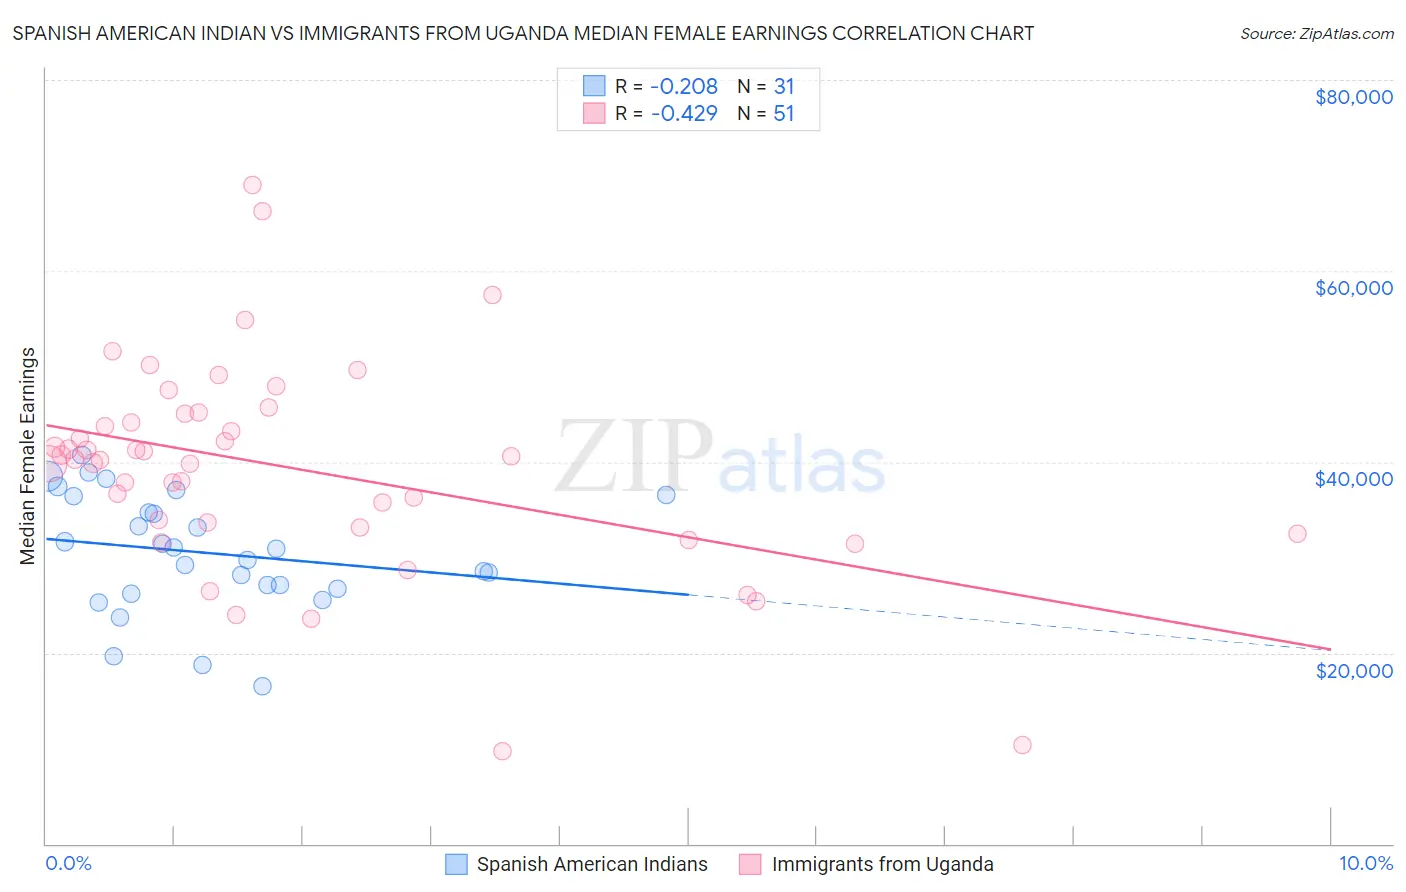 Spanish American Indian vs Immigrants from Uganda Median Female Earnings